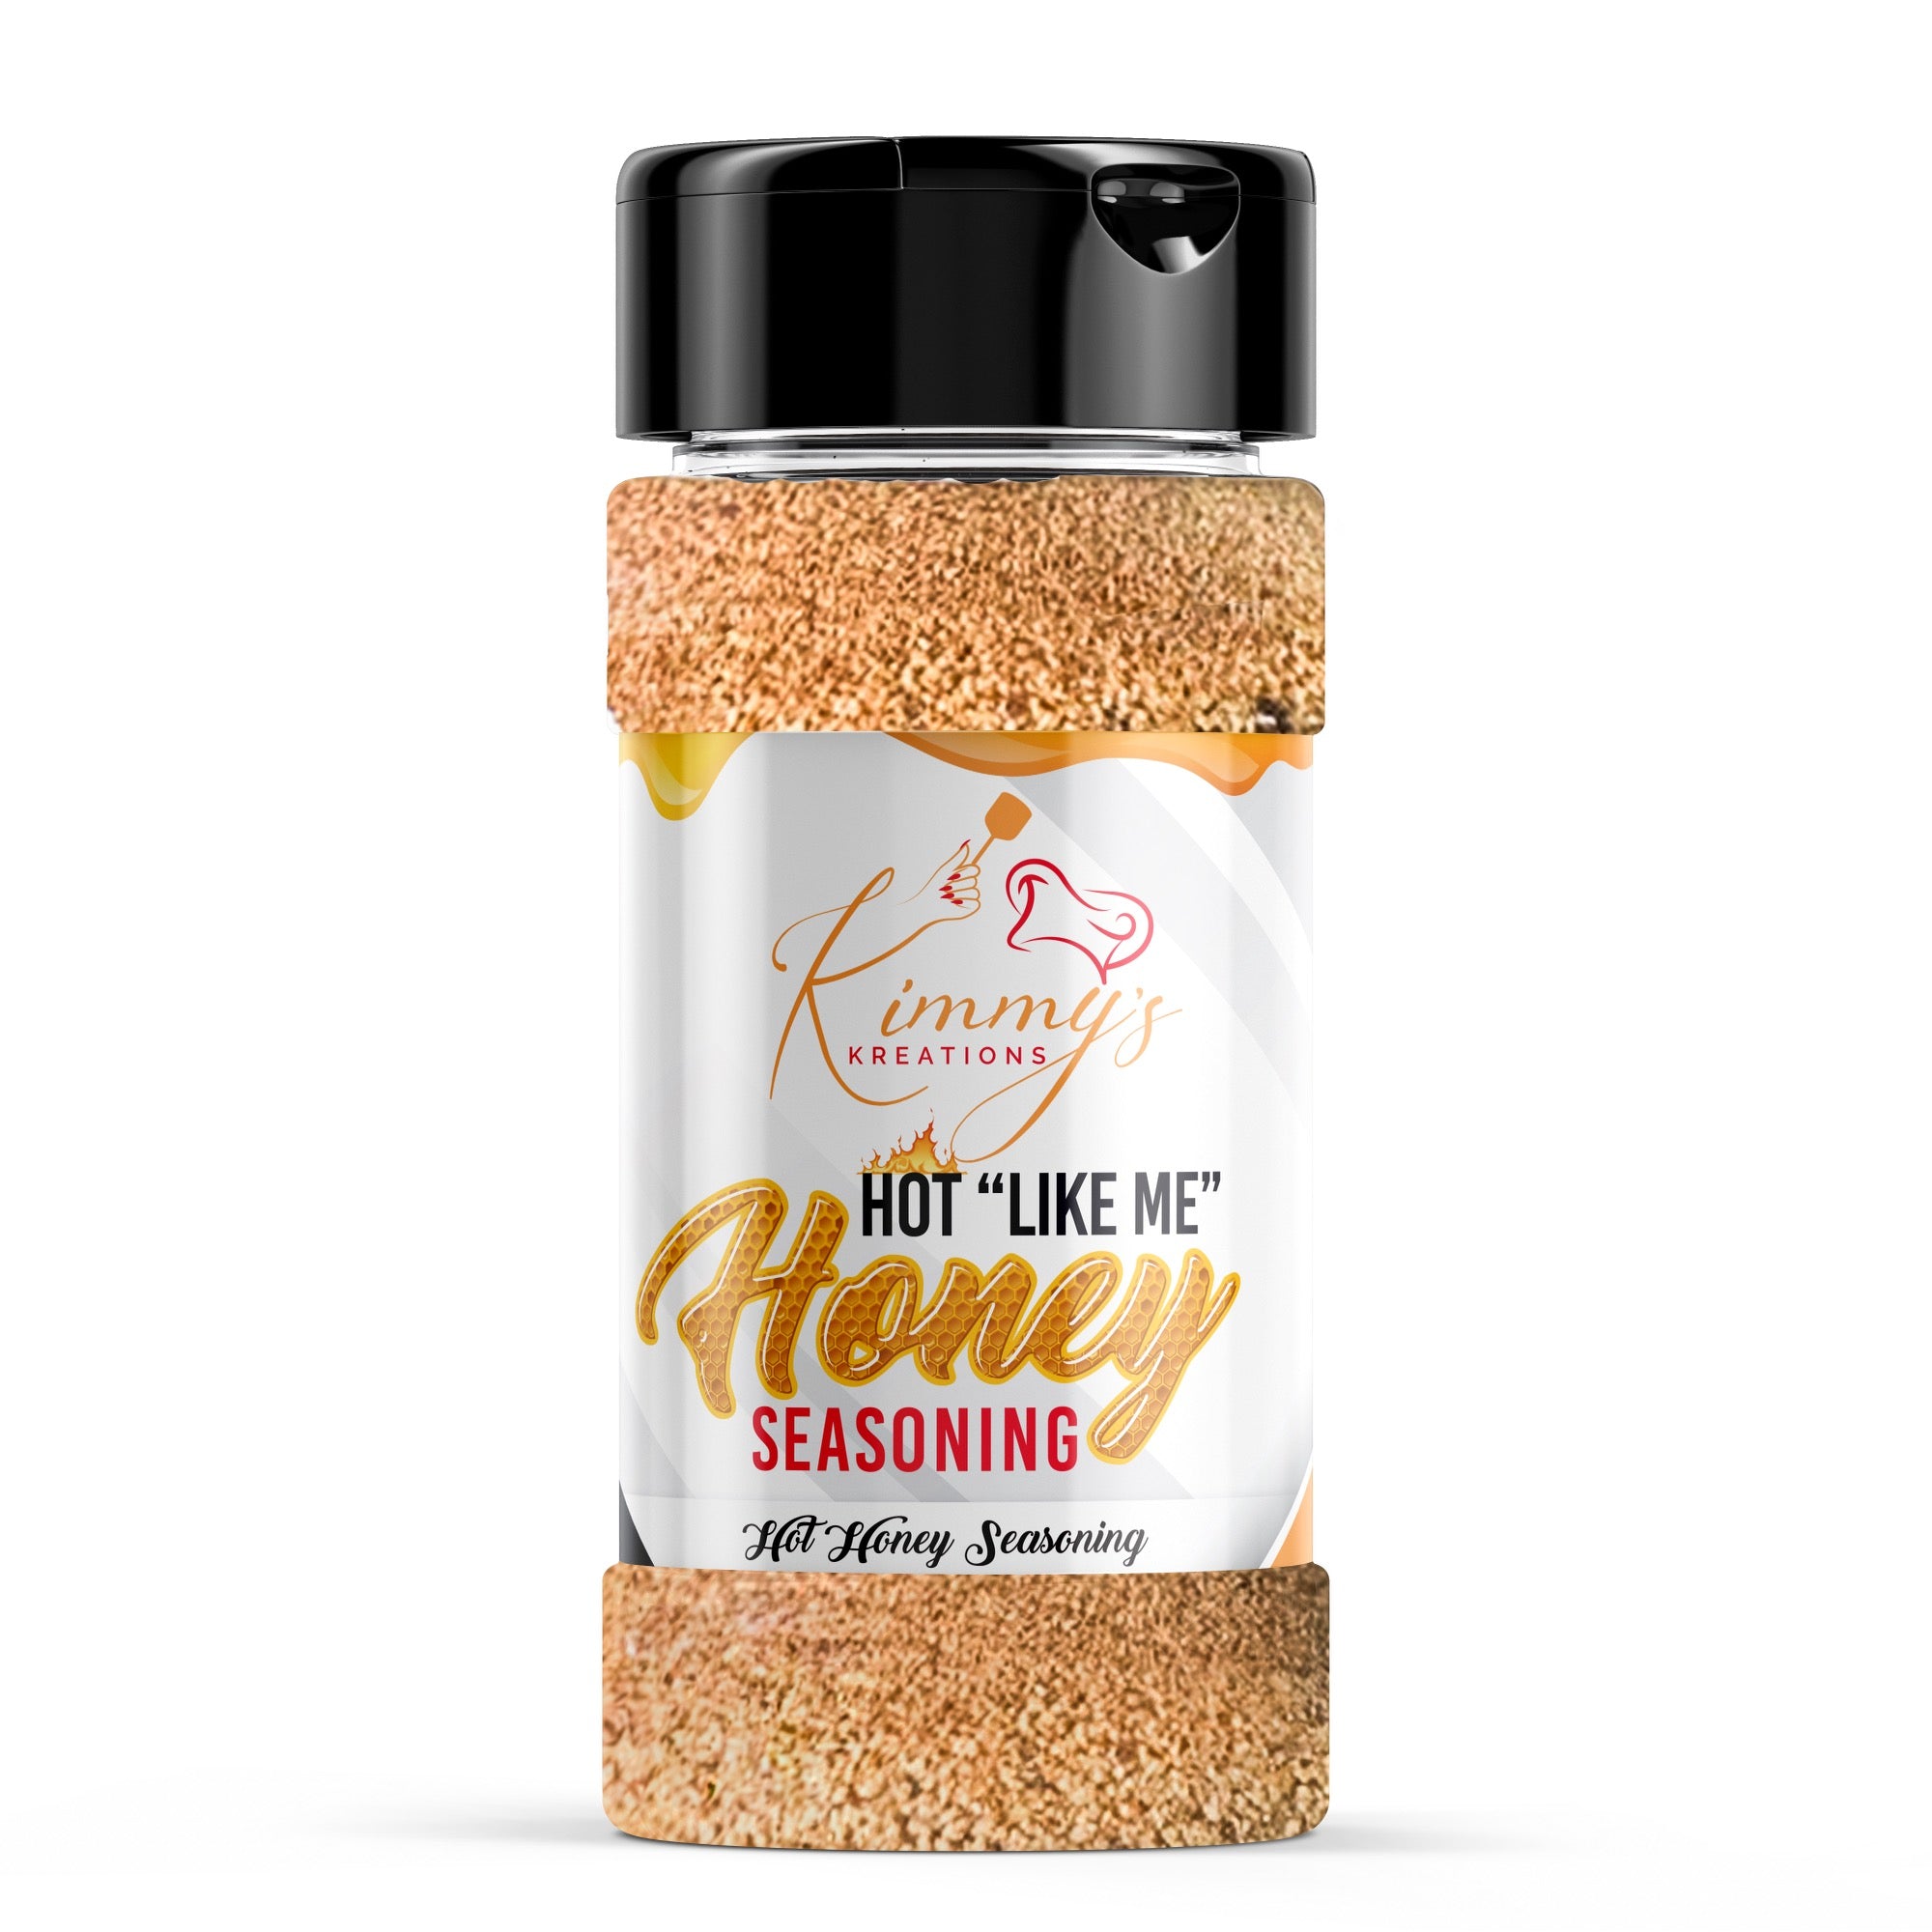 Hot “Like Me” Honey Seasoning